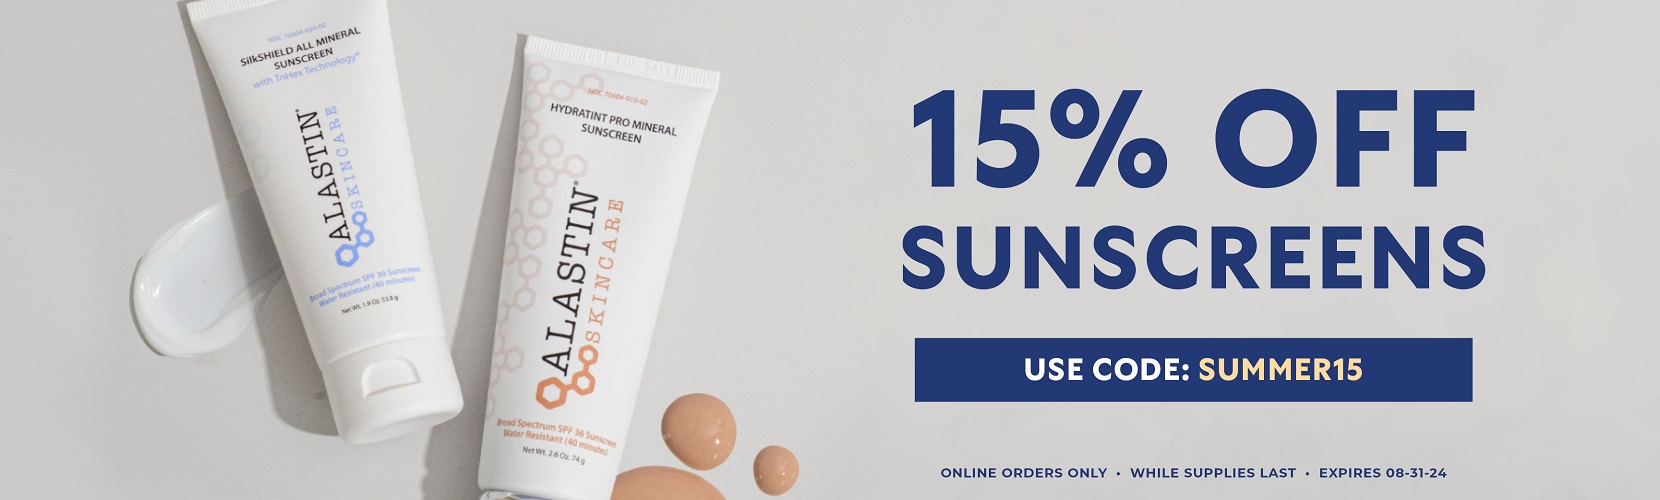 15% OFF Sunscreens